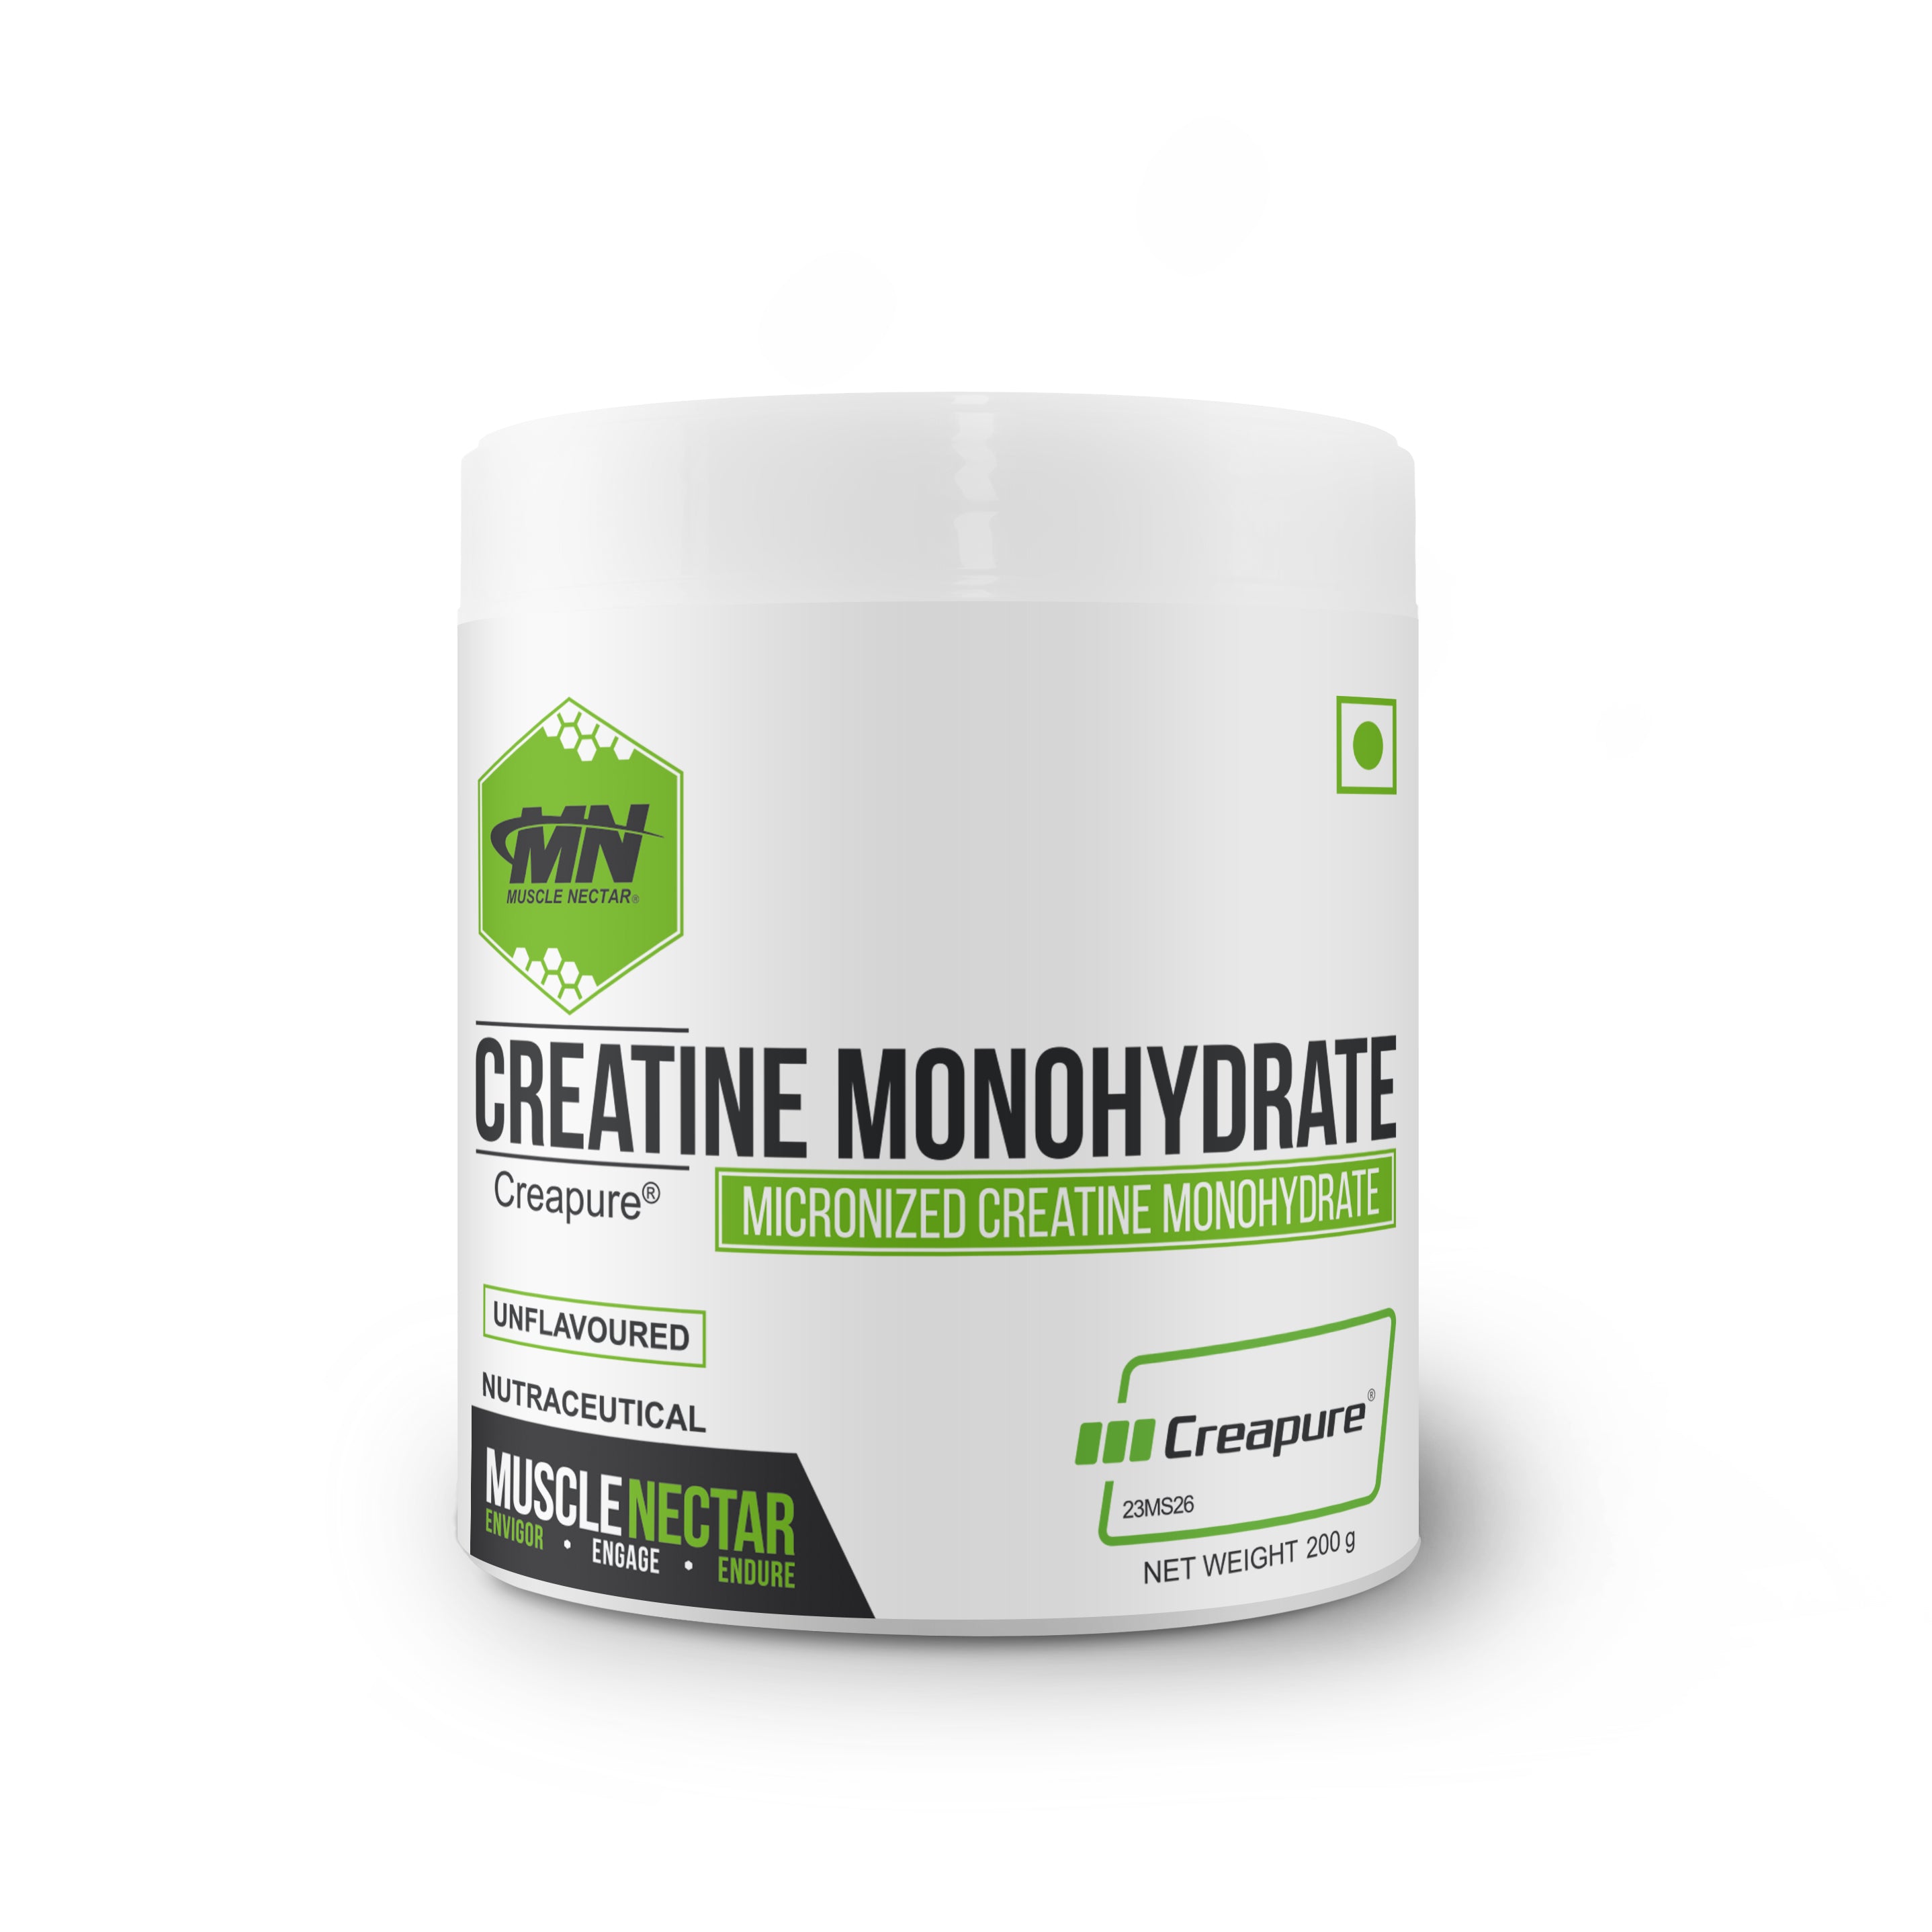 Creatine Monohydrate Made With Creapure®